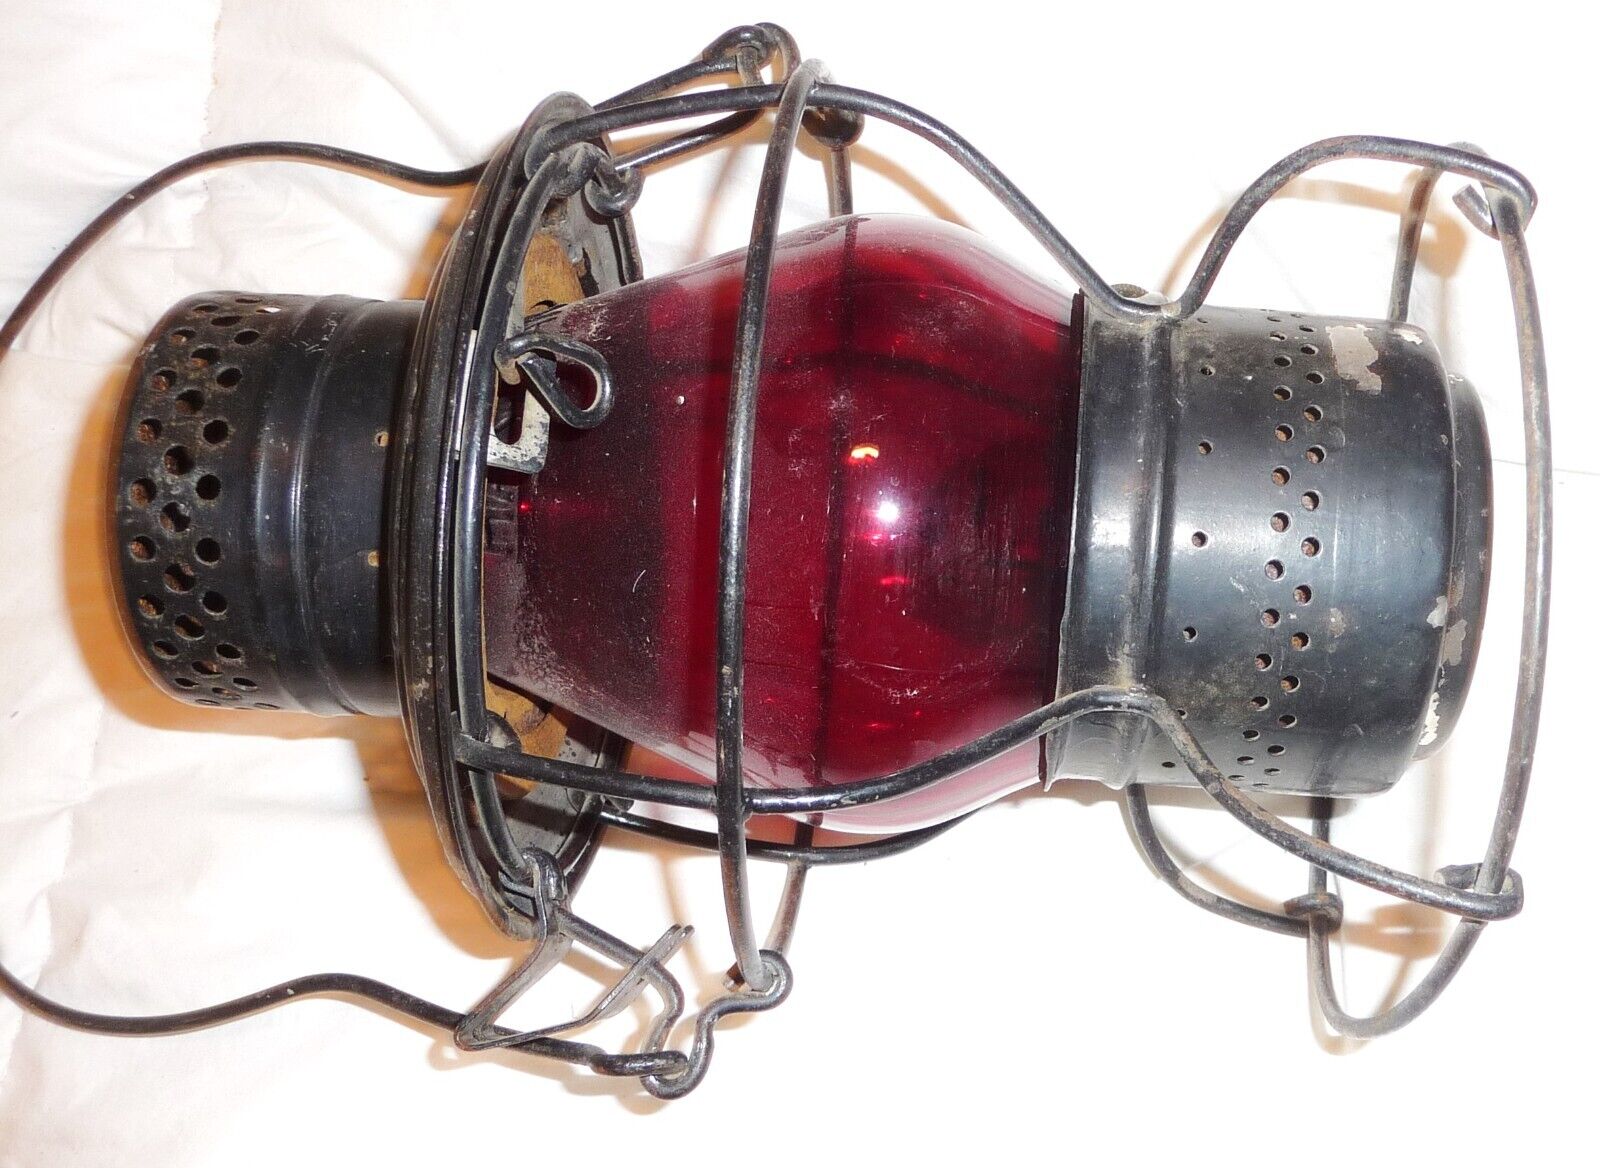 Handlan Railroad Lantern Red Globe latest Patent 5/5/25